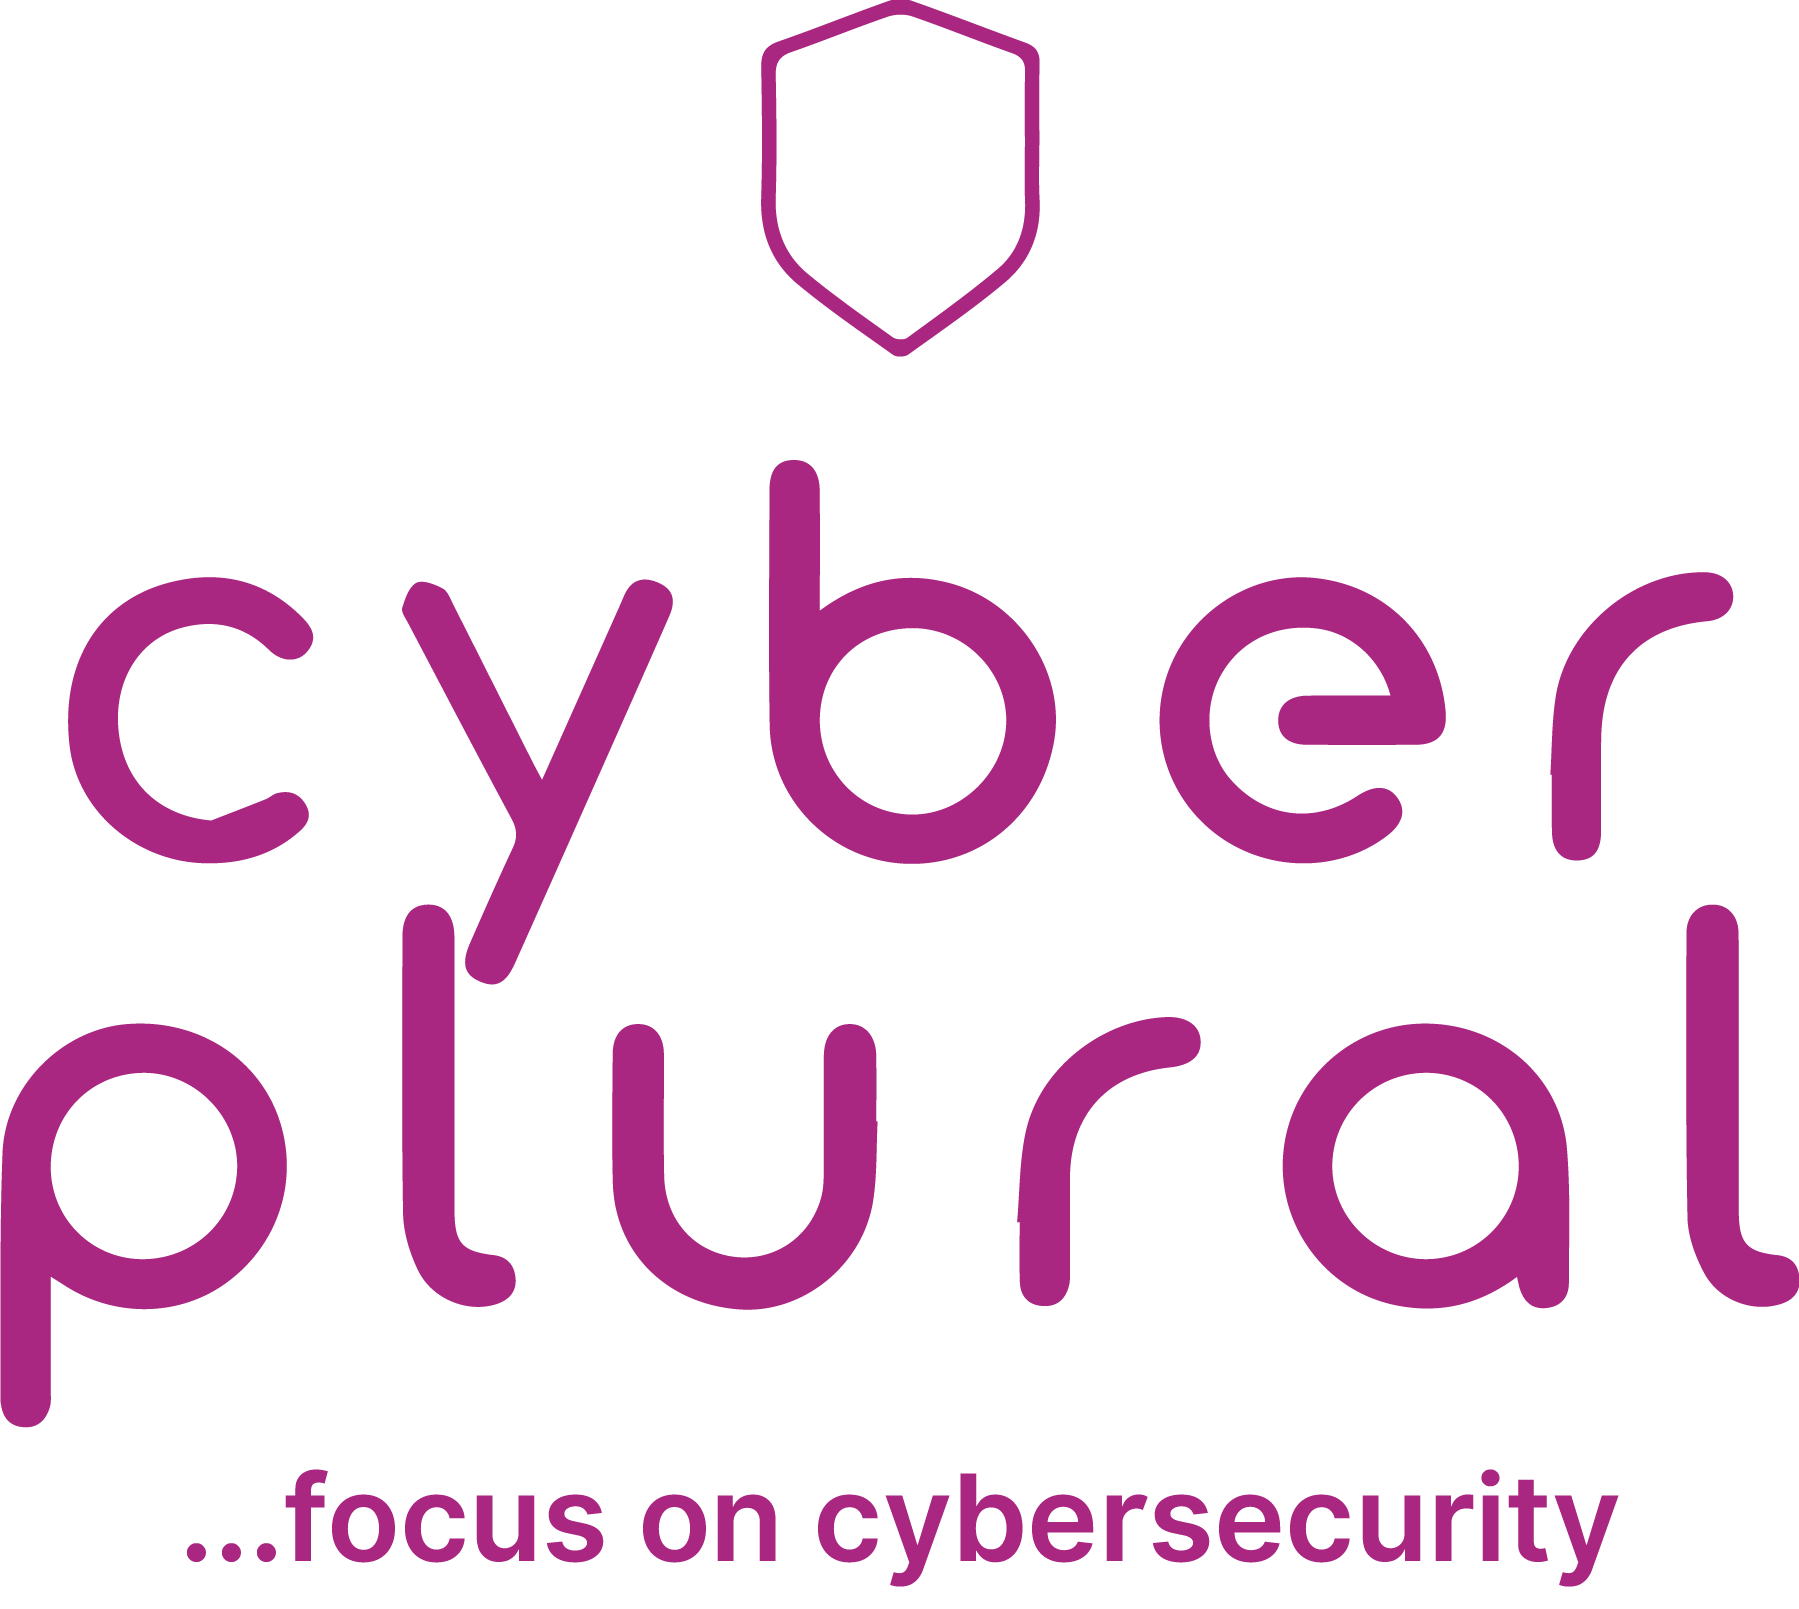 CyberPlural Blog